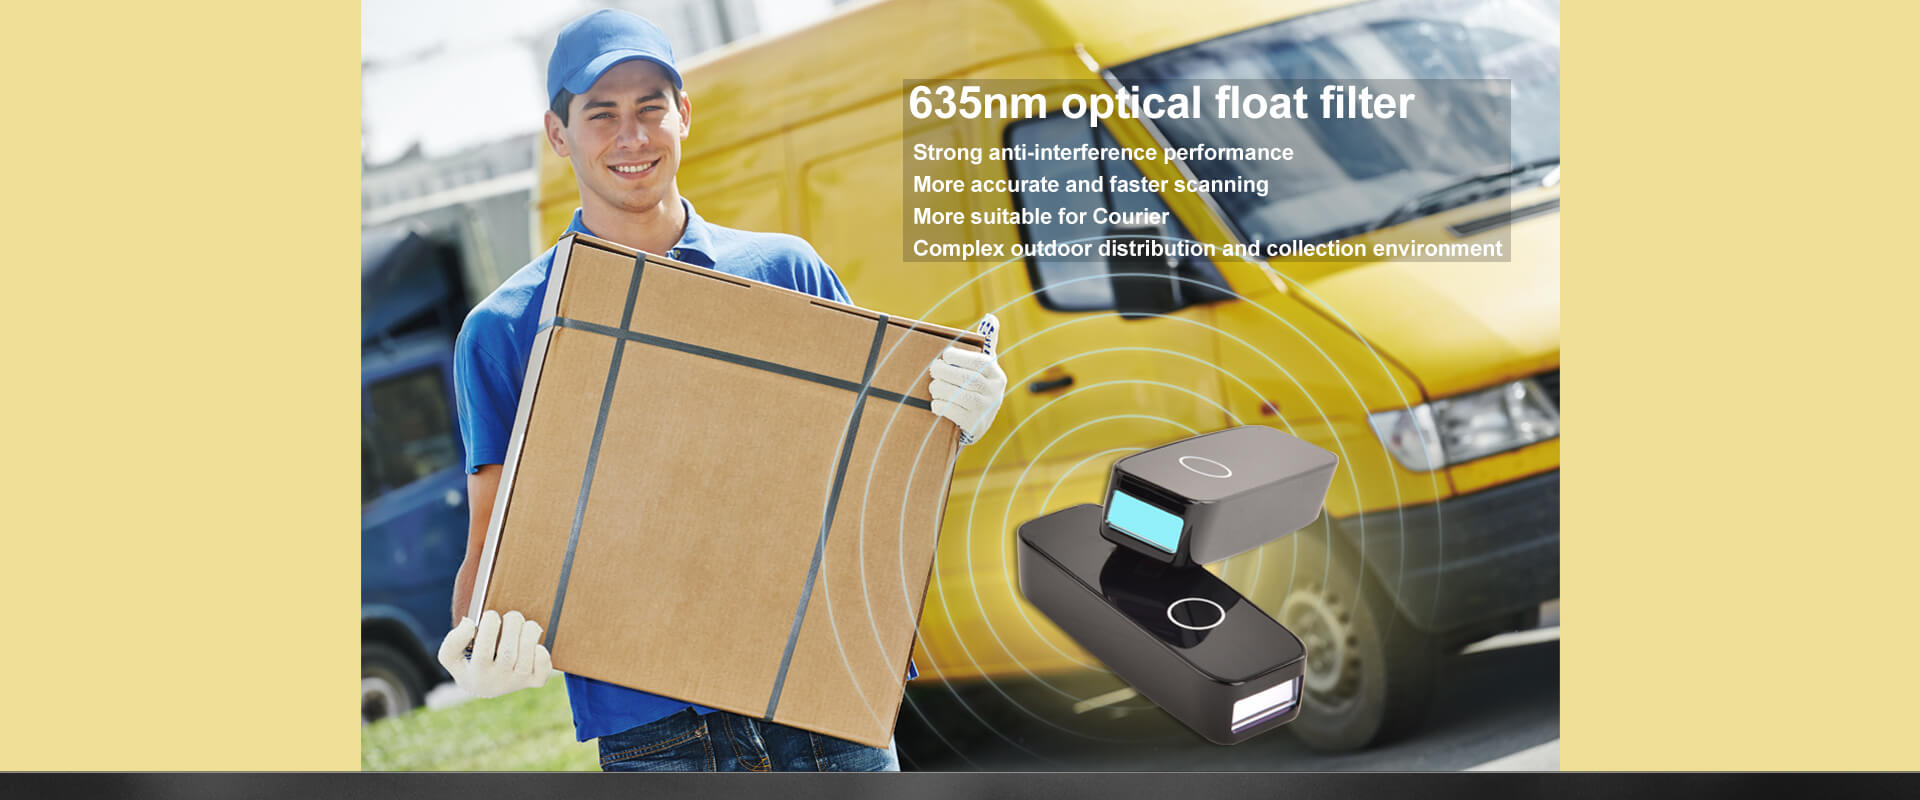 635mm opticle float filter scanner.jpg